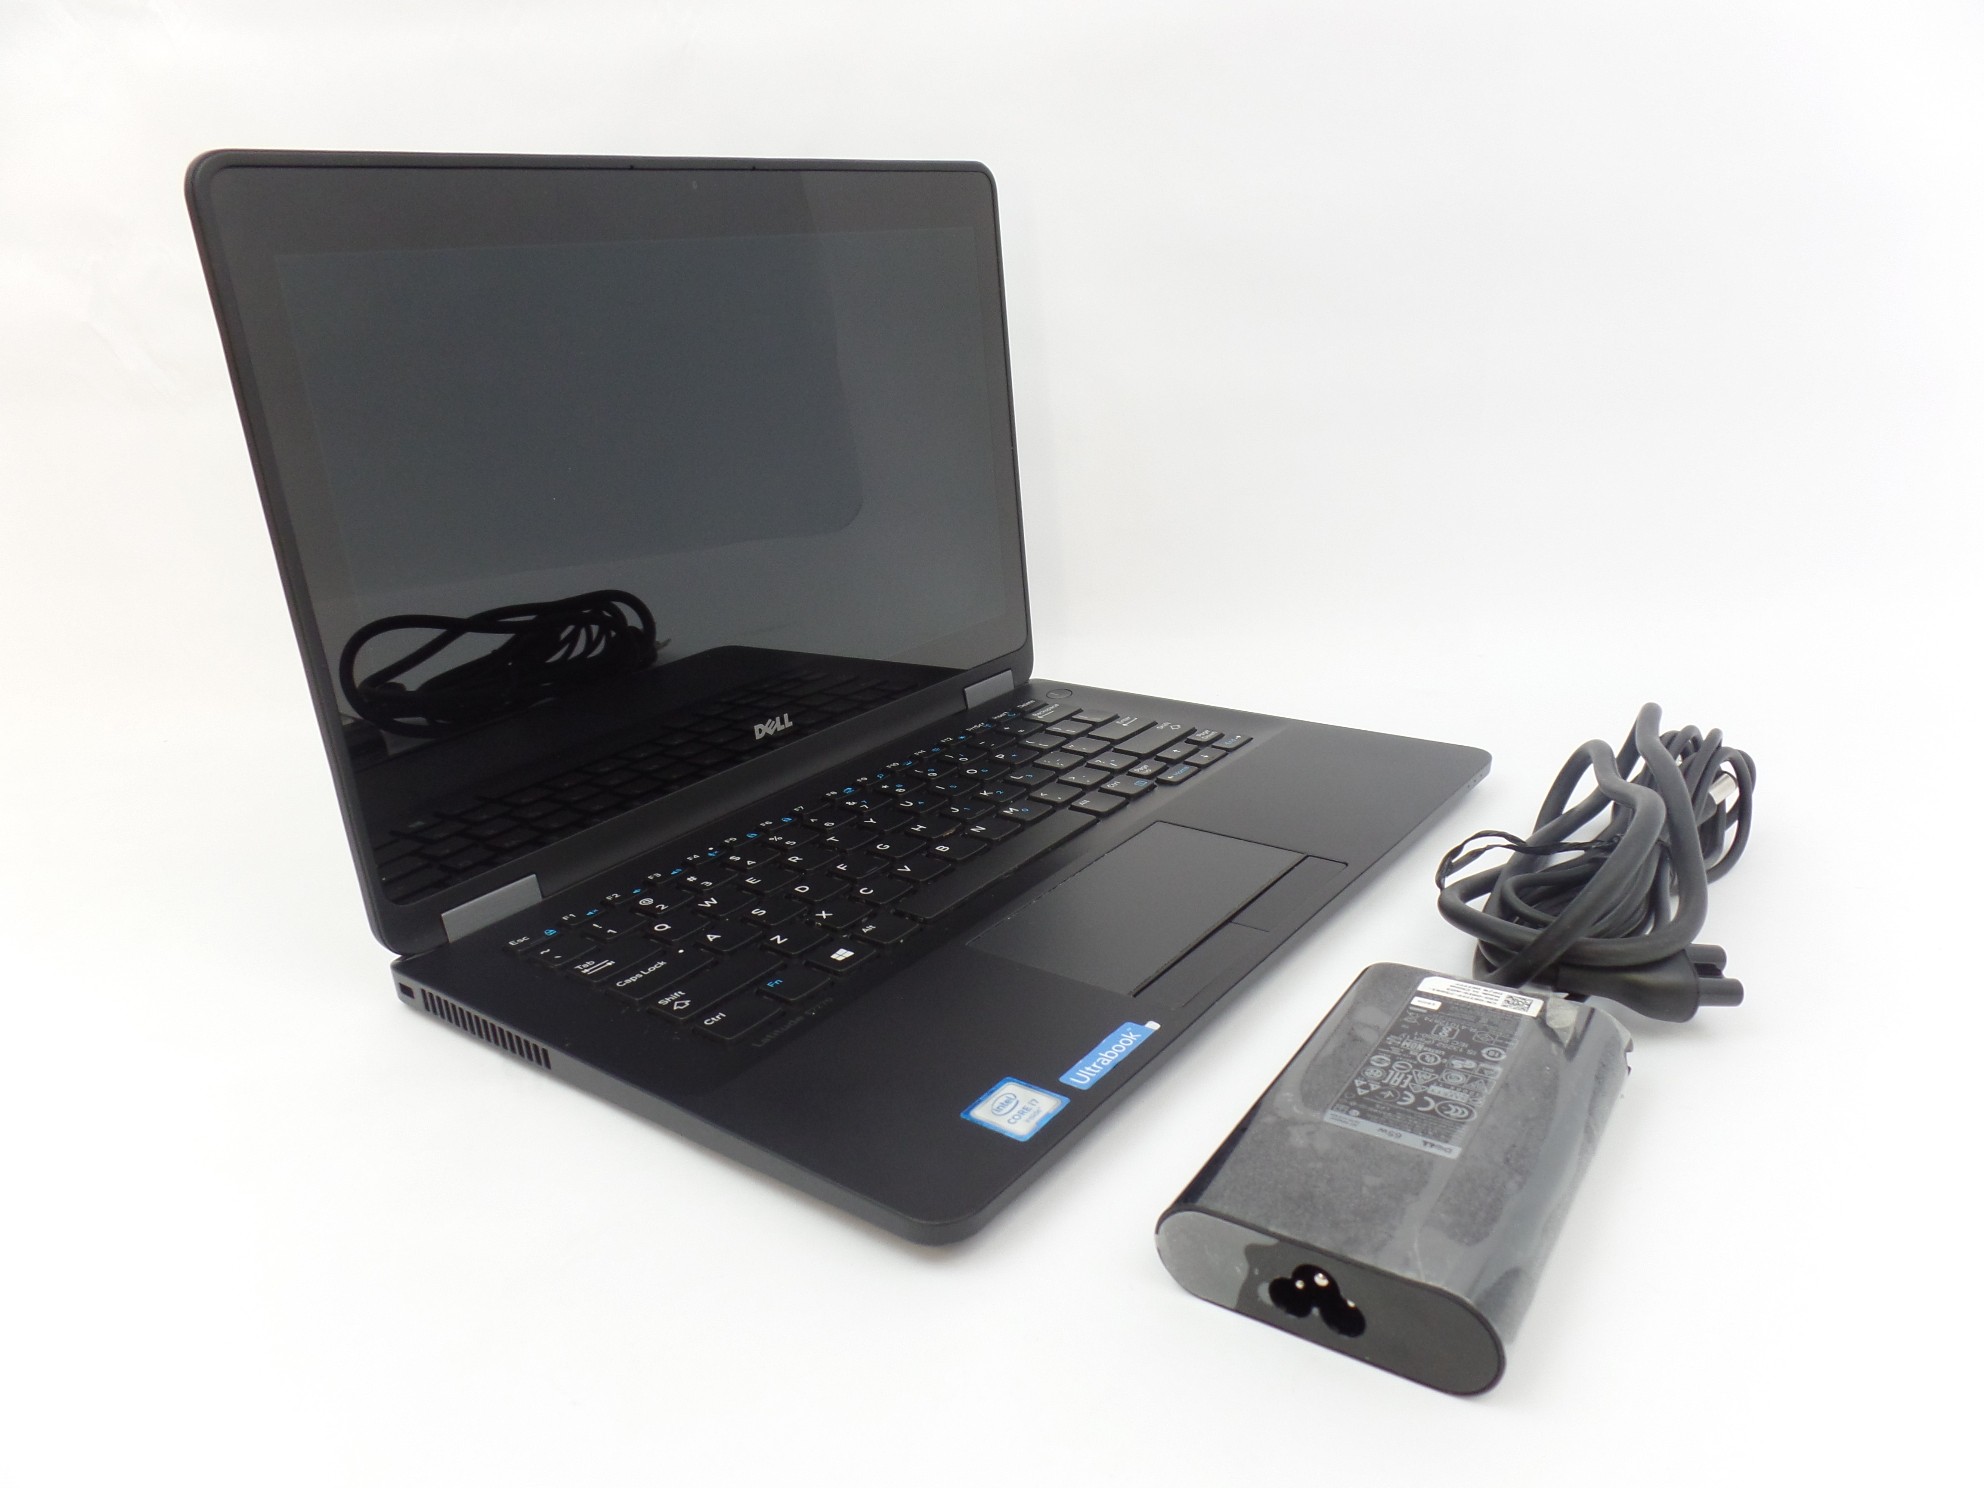 Dell Latitude E7270 12.5" FHD Touch i7-6600U 2.6GHz 8GB 512GB SSD W10P Laptop U